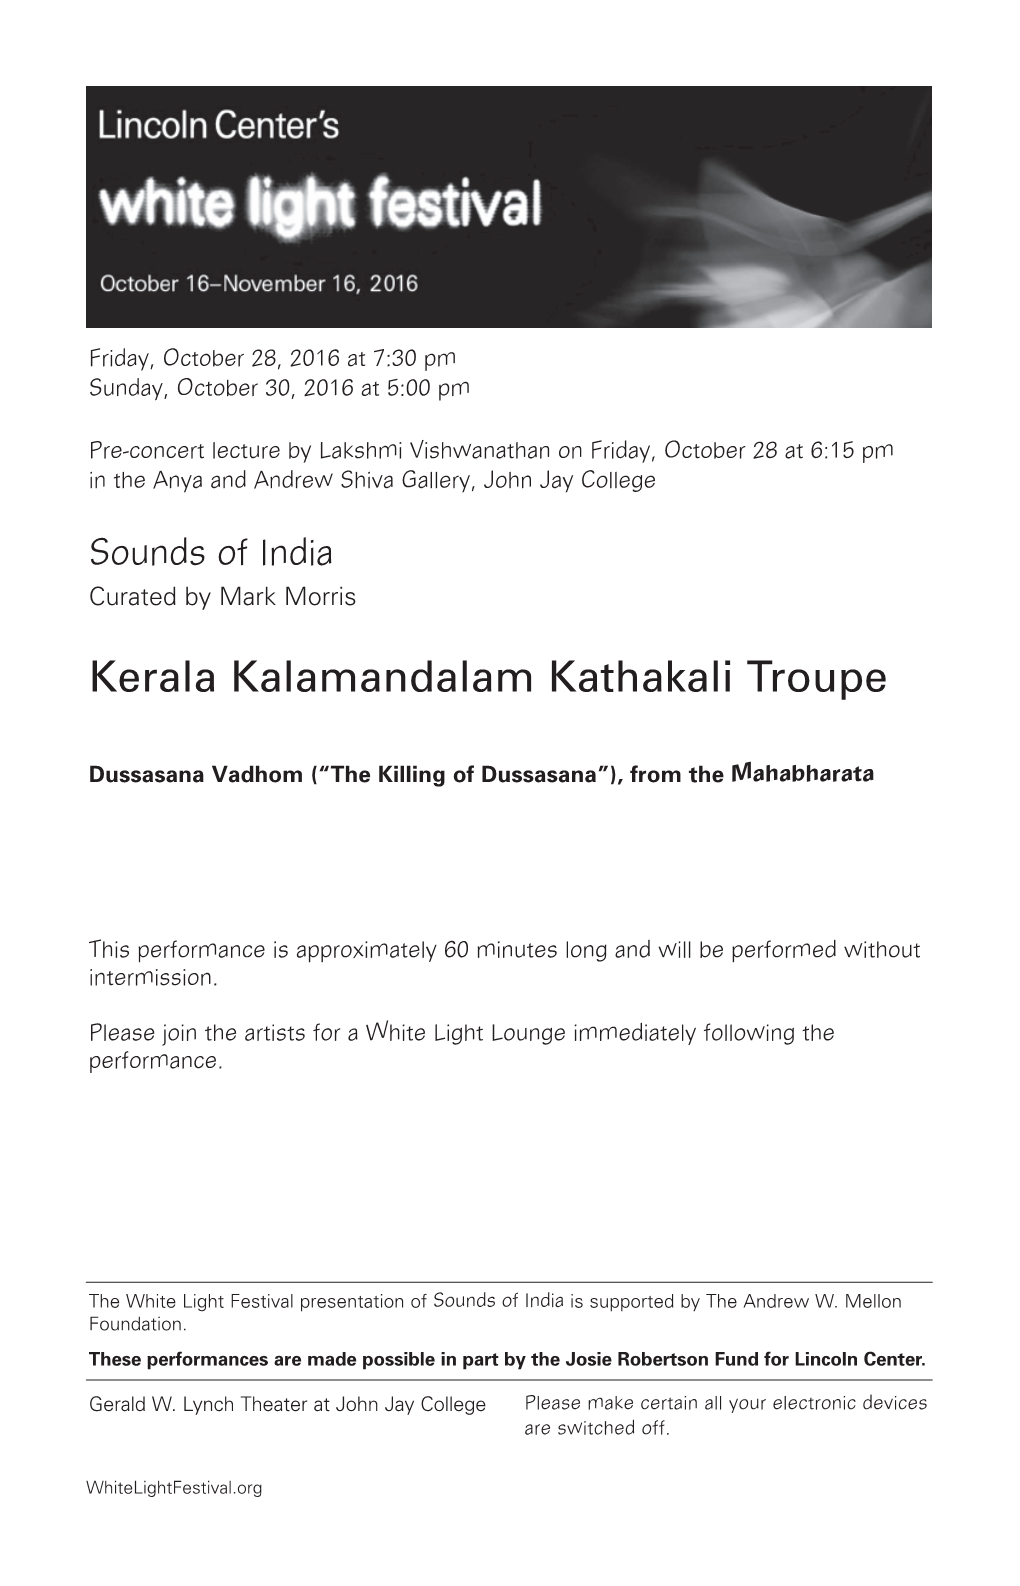 Kerala Kalamandalam Kathakali Troupe